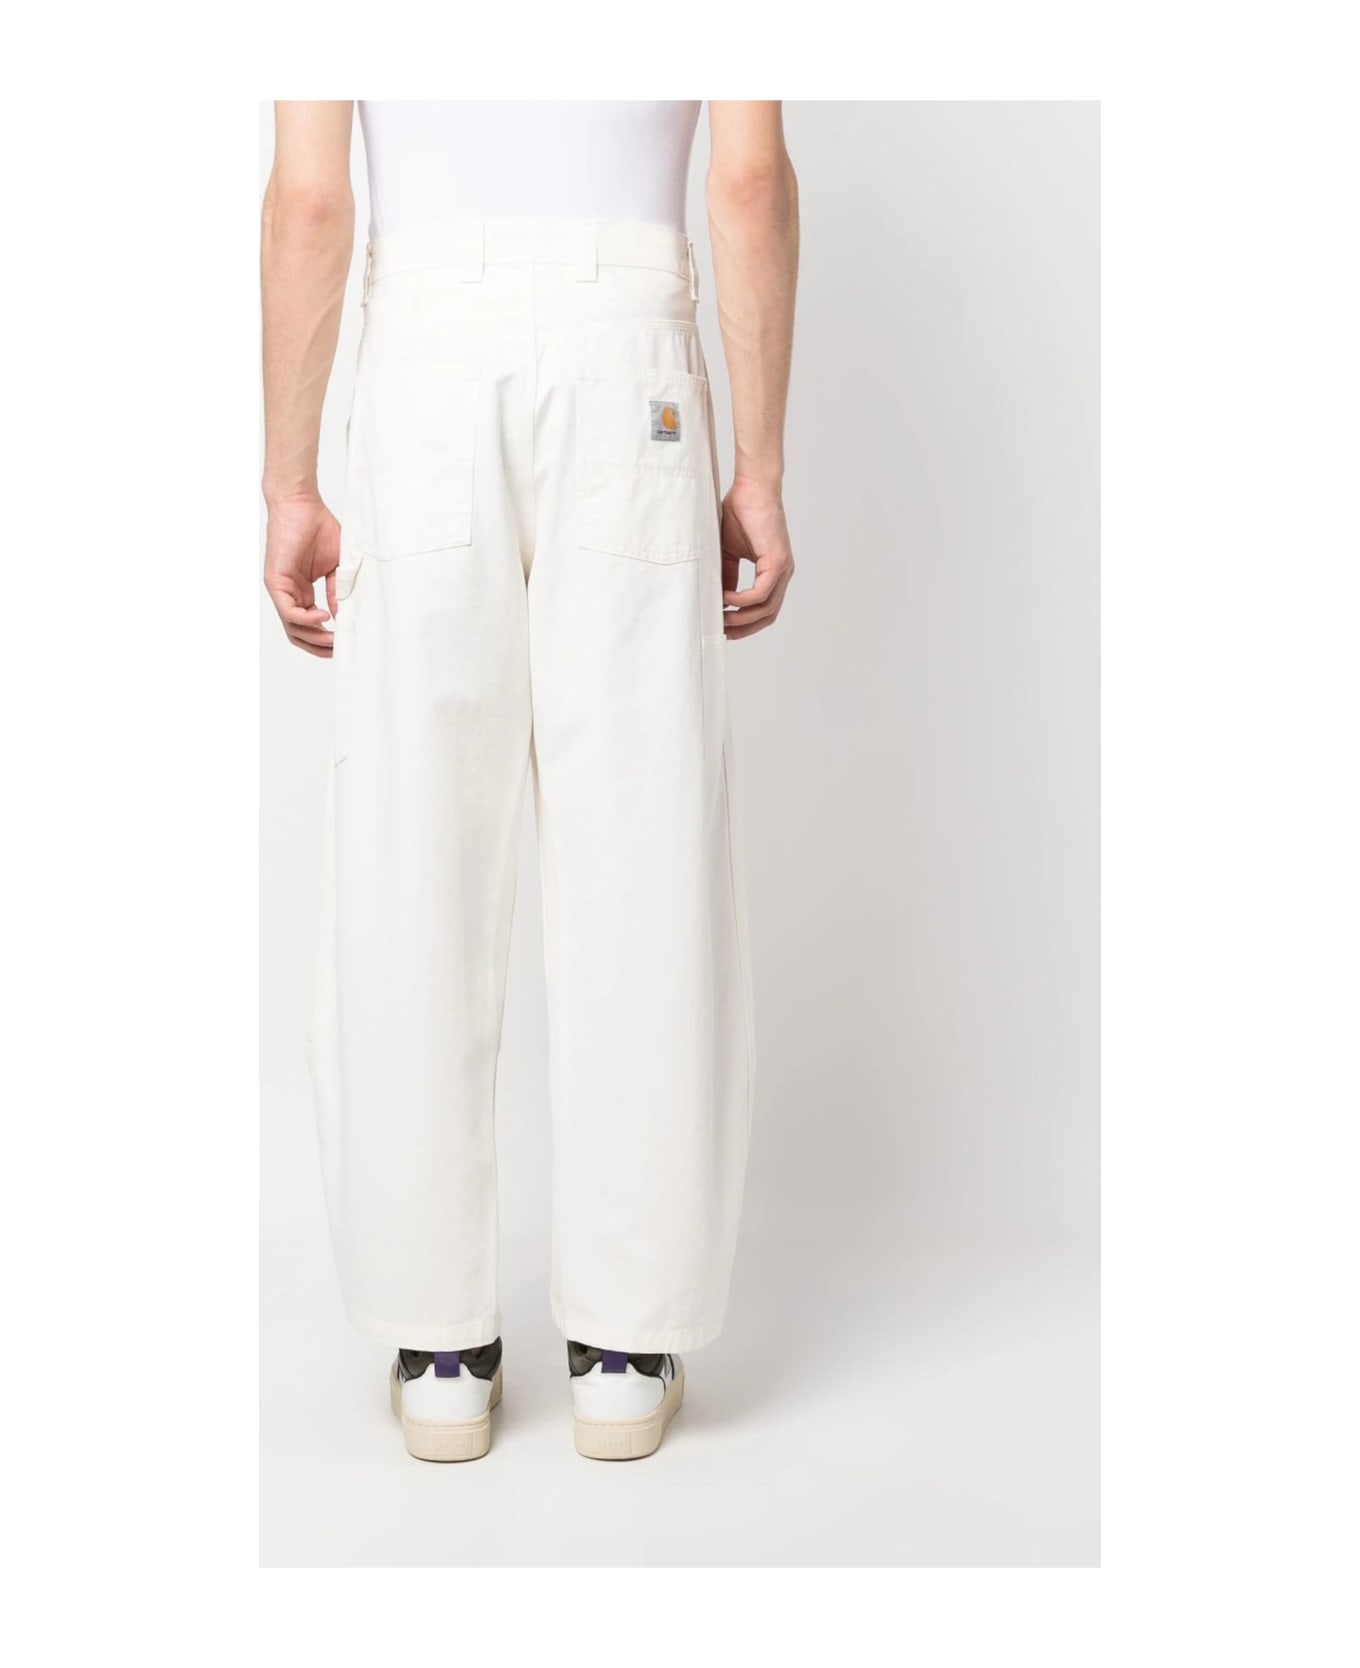 Carhartt Trousers White - White